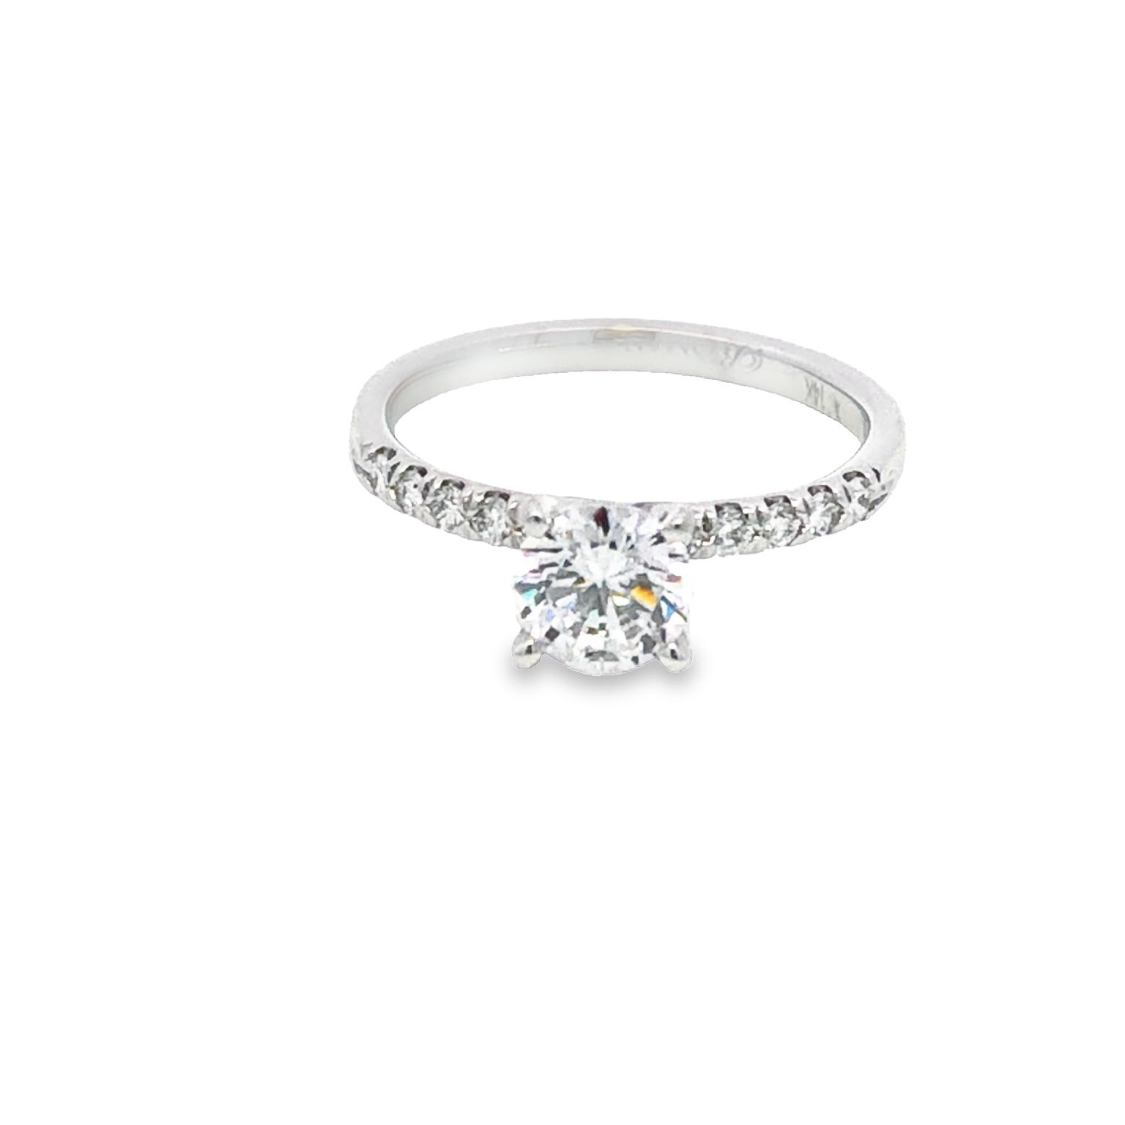 Romanza 14K White Gold Diamond Engagement Ring Setting